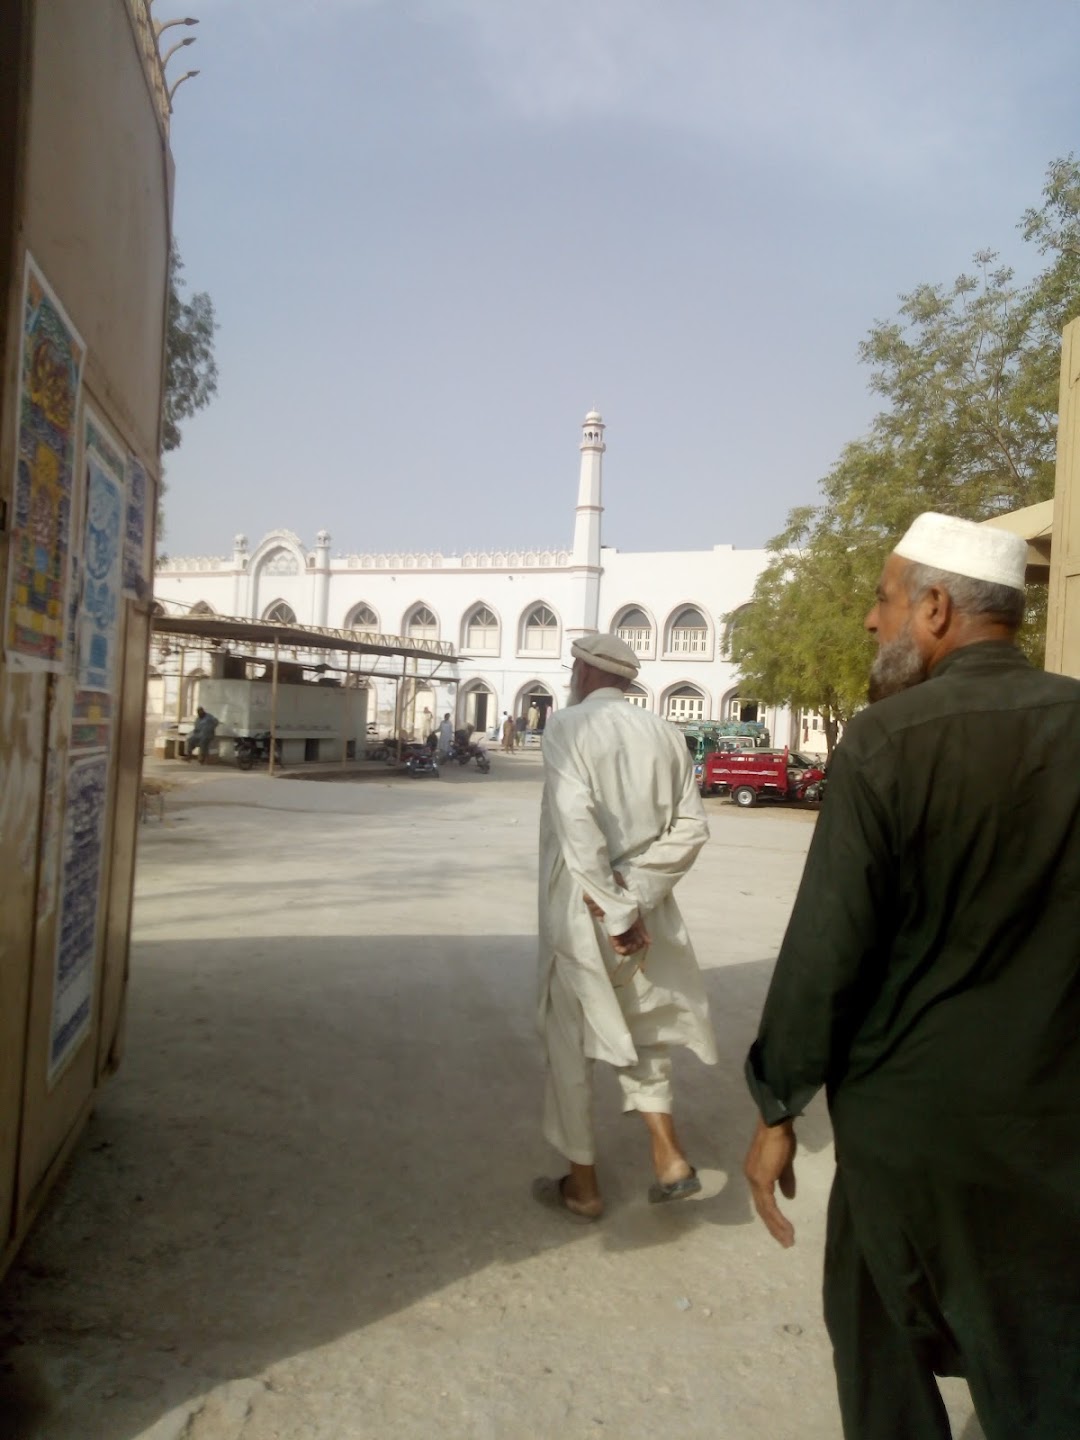 Tablighi markaz sukkur Yousaf masjid shikarpoor road